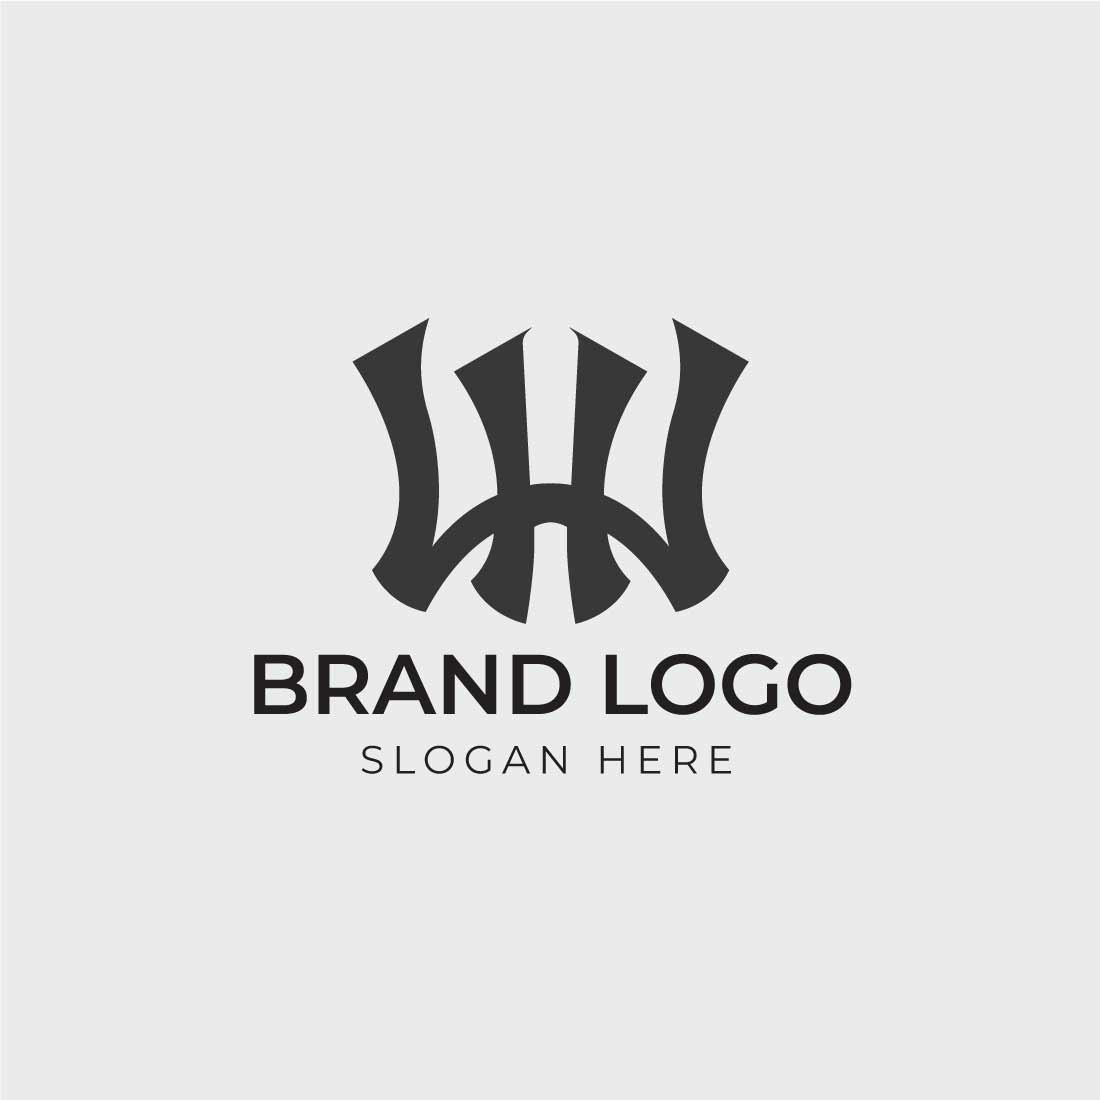 WH logo letter design concept preview image.